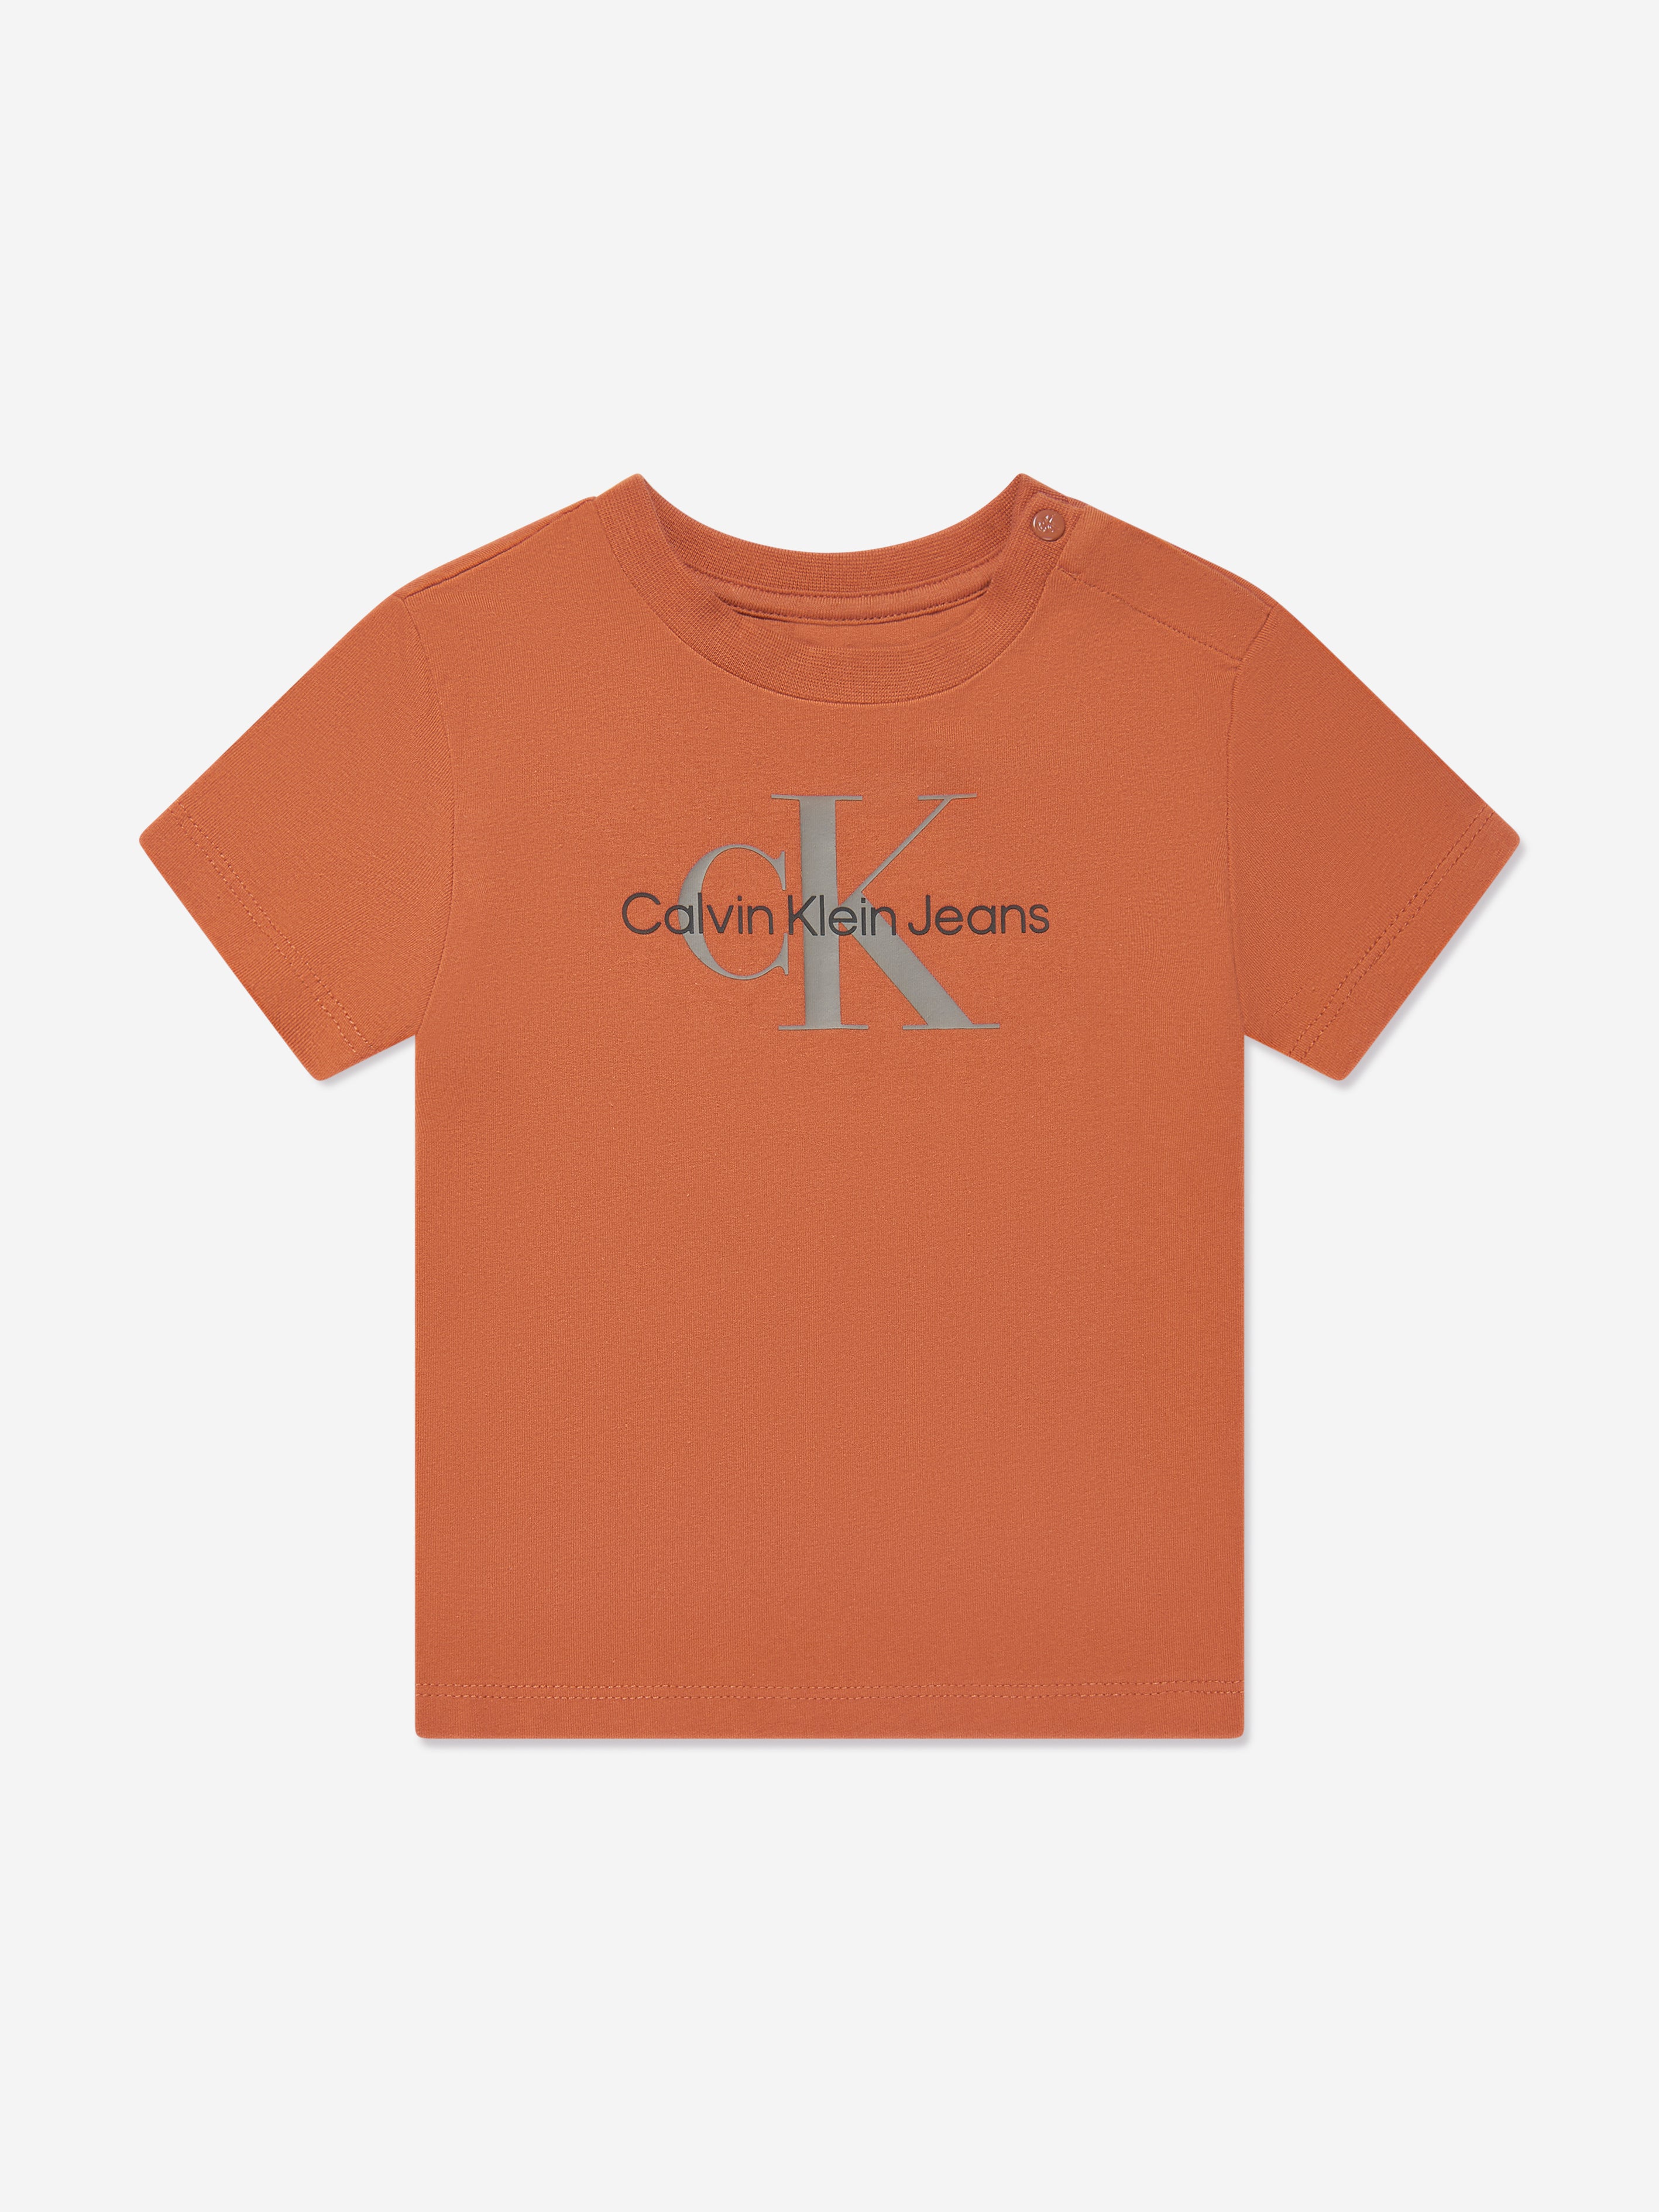 Jeans in Clothing | Calvin T-Shirt Klein Auburn Monogram Baby Childsplay